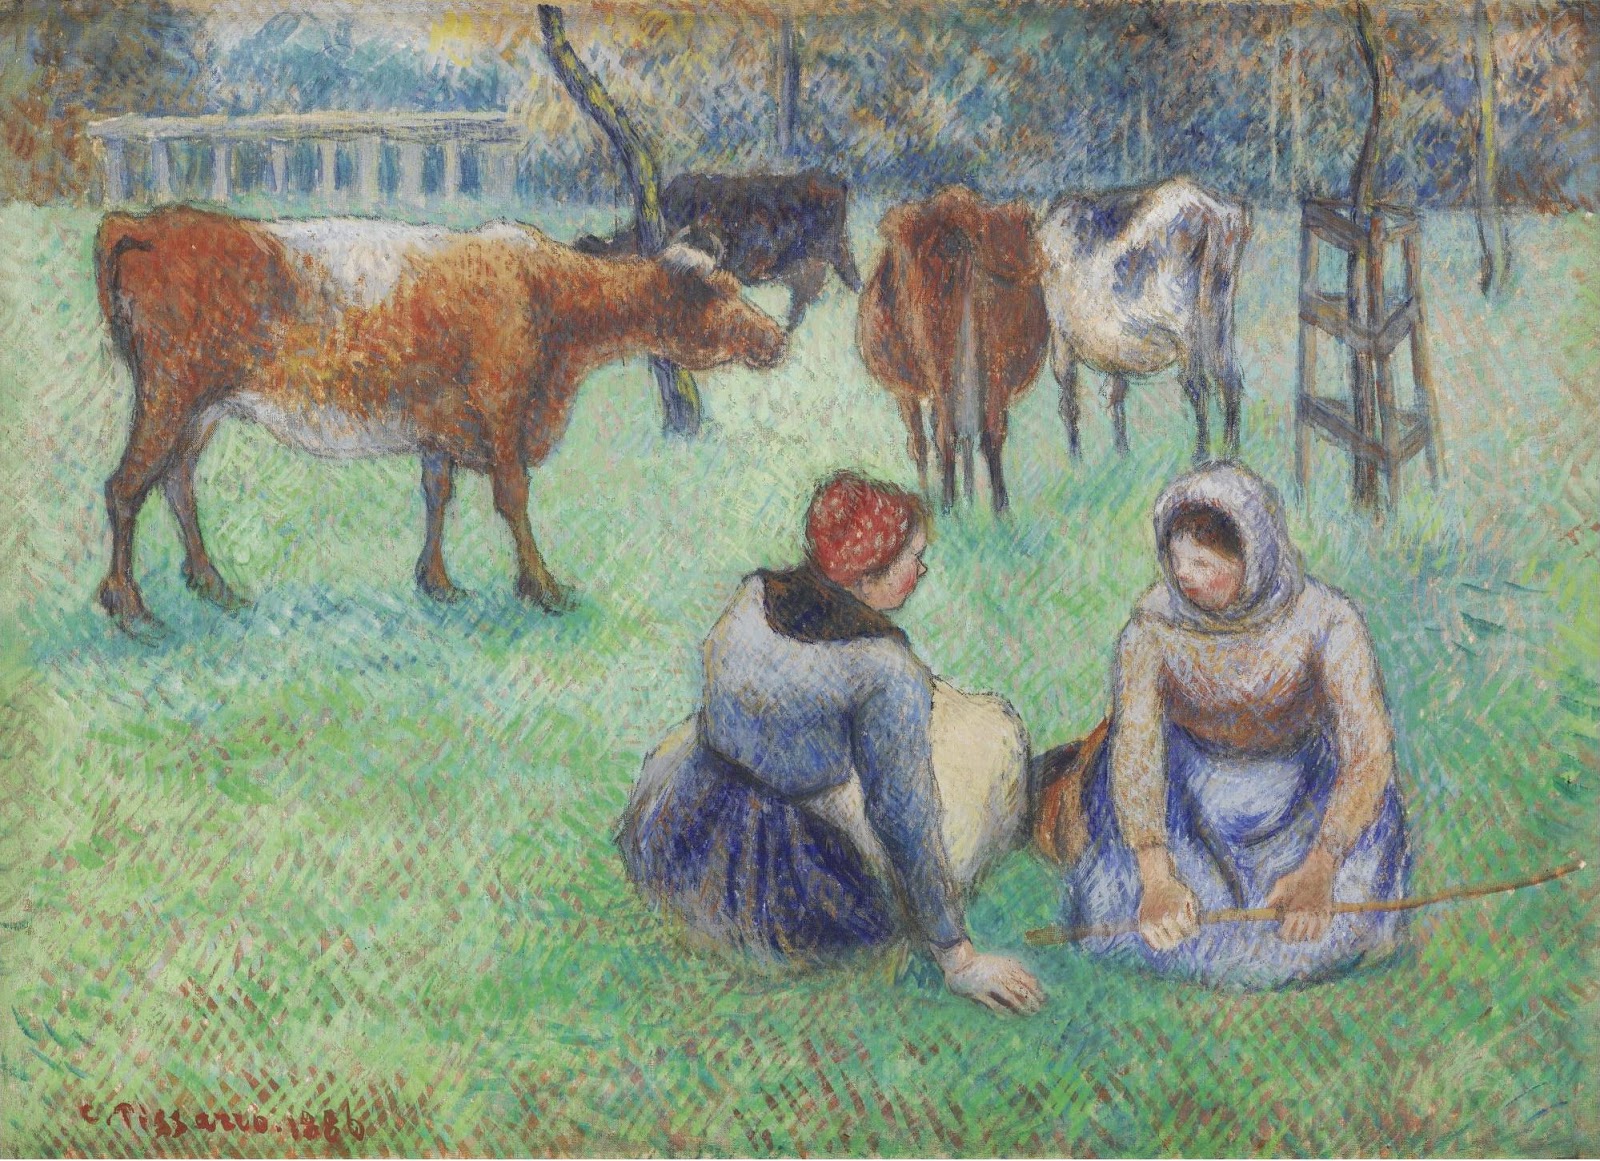 Camille+Pissarro-1830-1903 (399).jpg